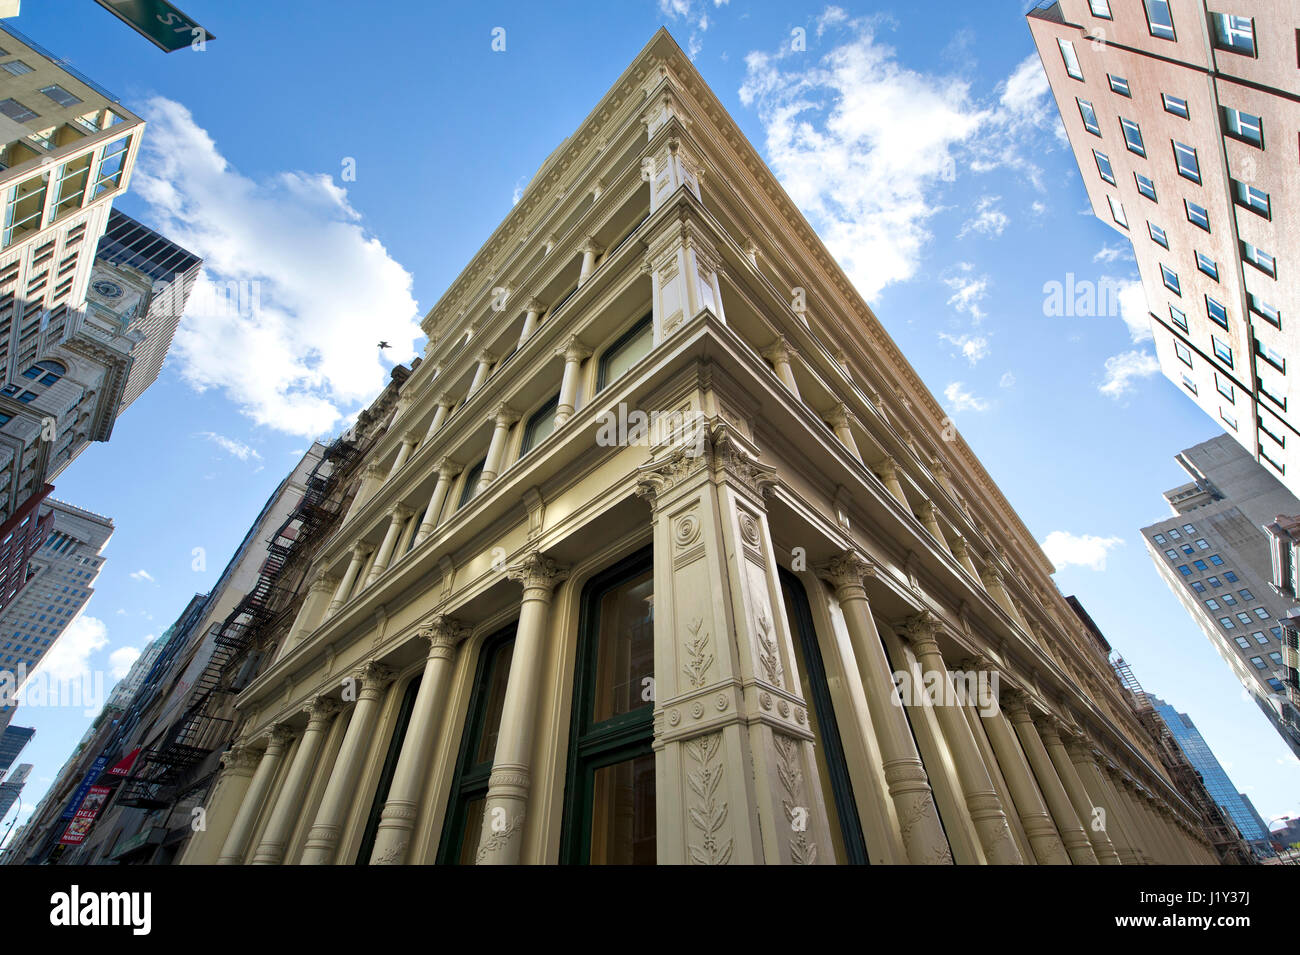 Cast iron facade of a historical building in SoHo, New York City Stock Photo